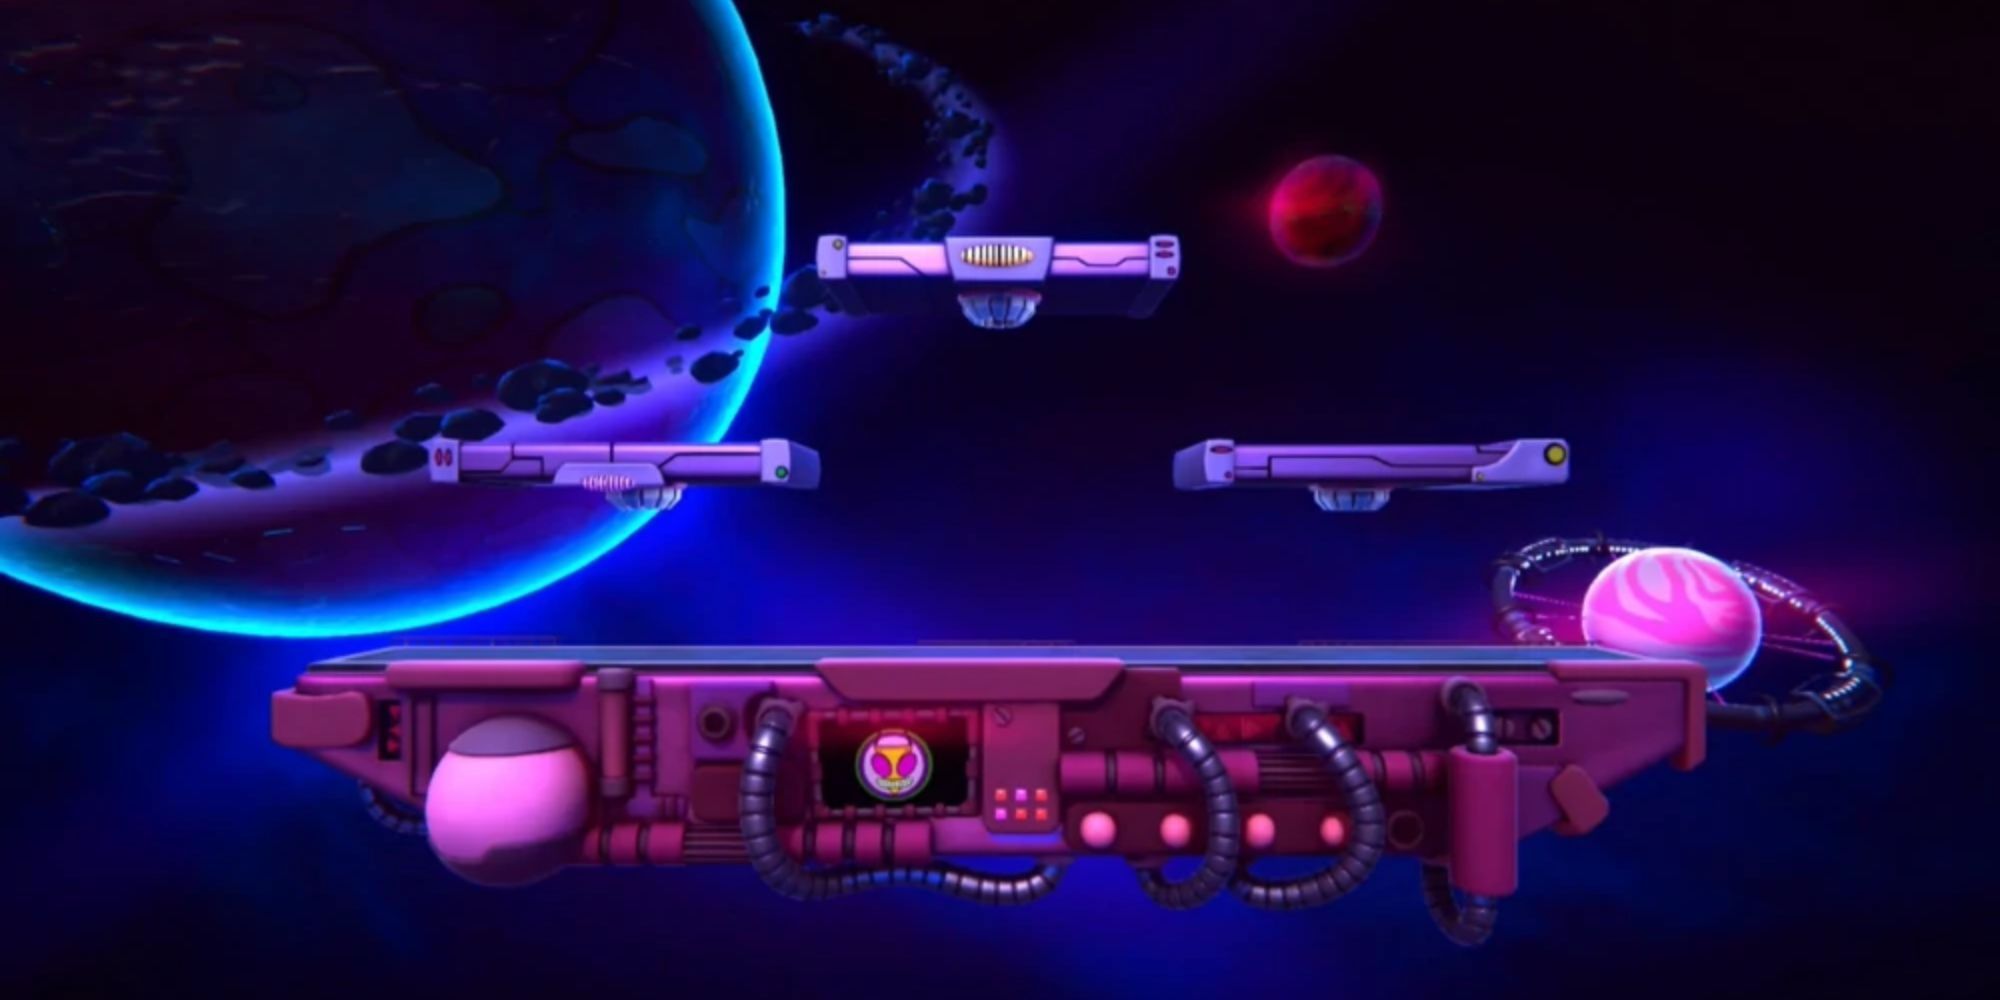 Irken Armada Invasion platforms float through space